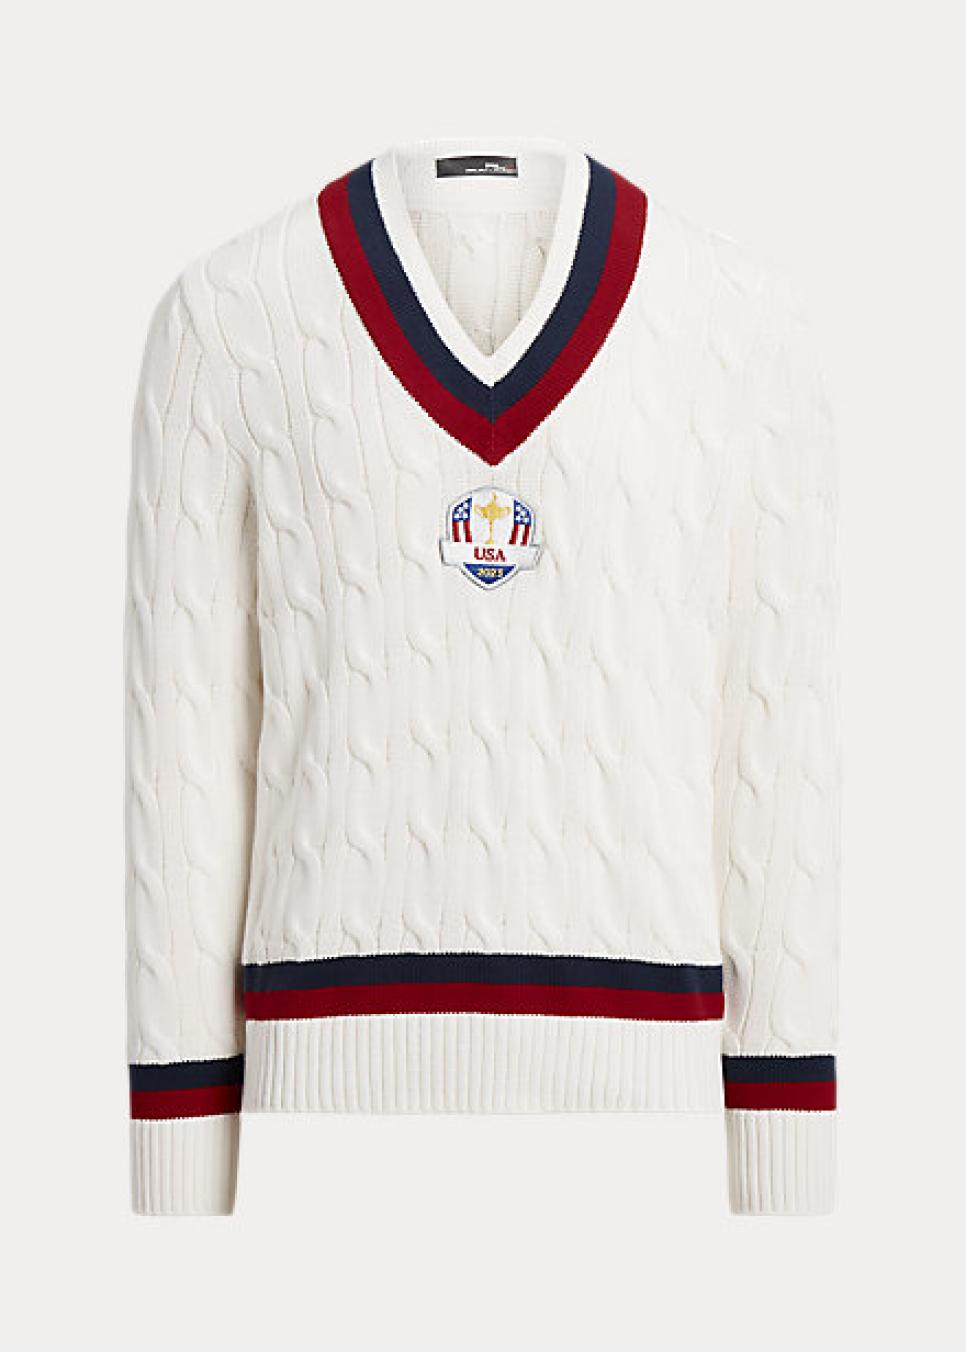 rx-rlxrlx-us-ryder-cup-uniform-cricket-sweater.jpeg